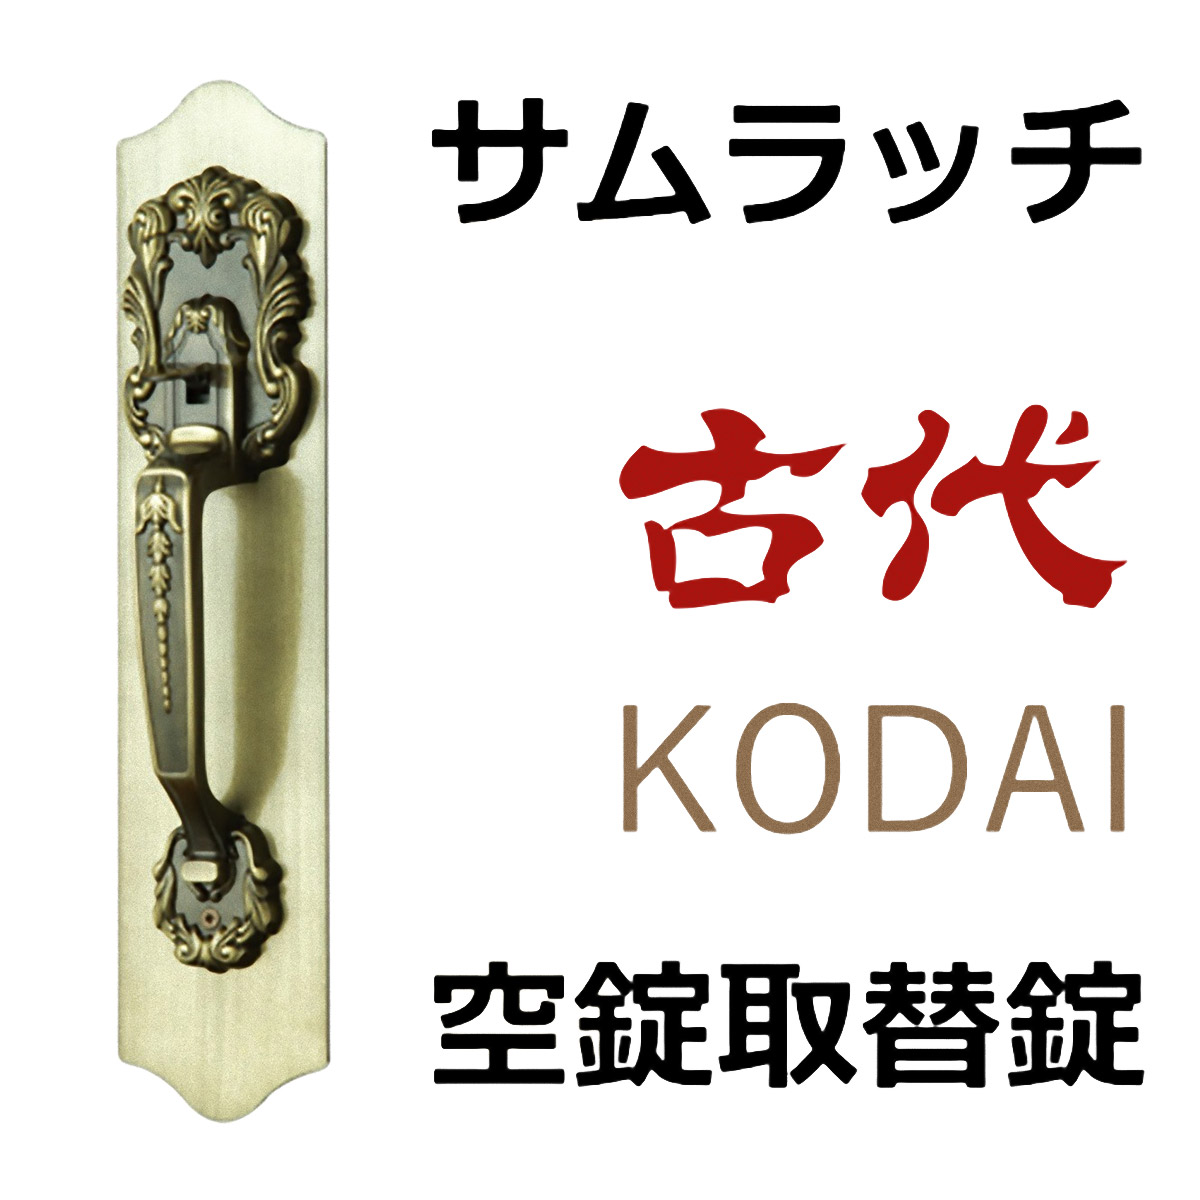 KODAI(古代) サムラッチ取替錠 1SET AB 924504 通販